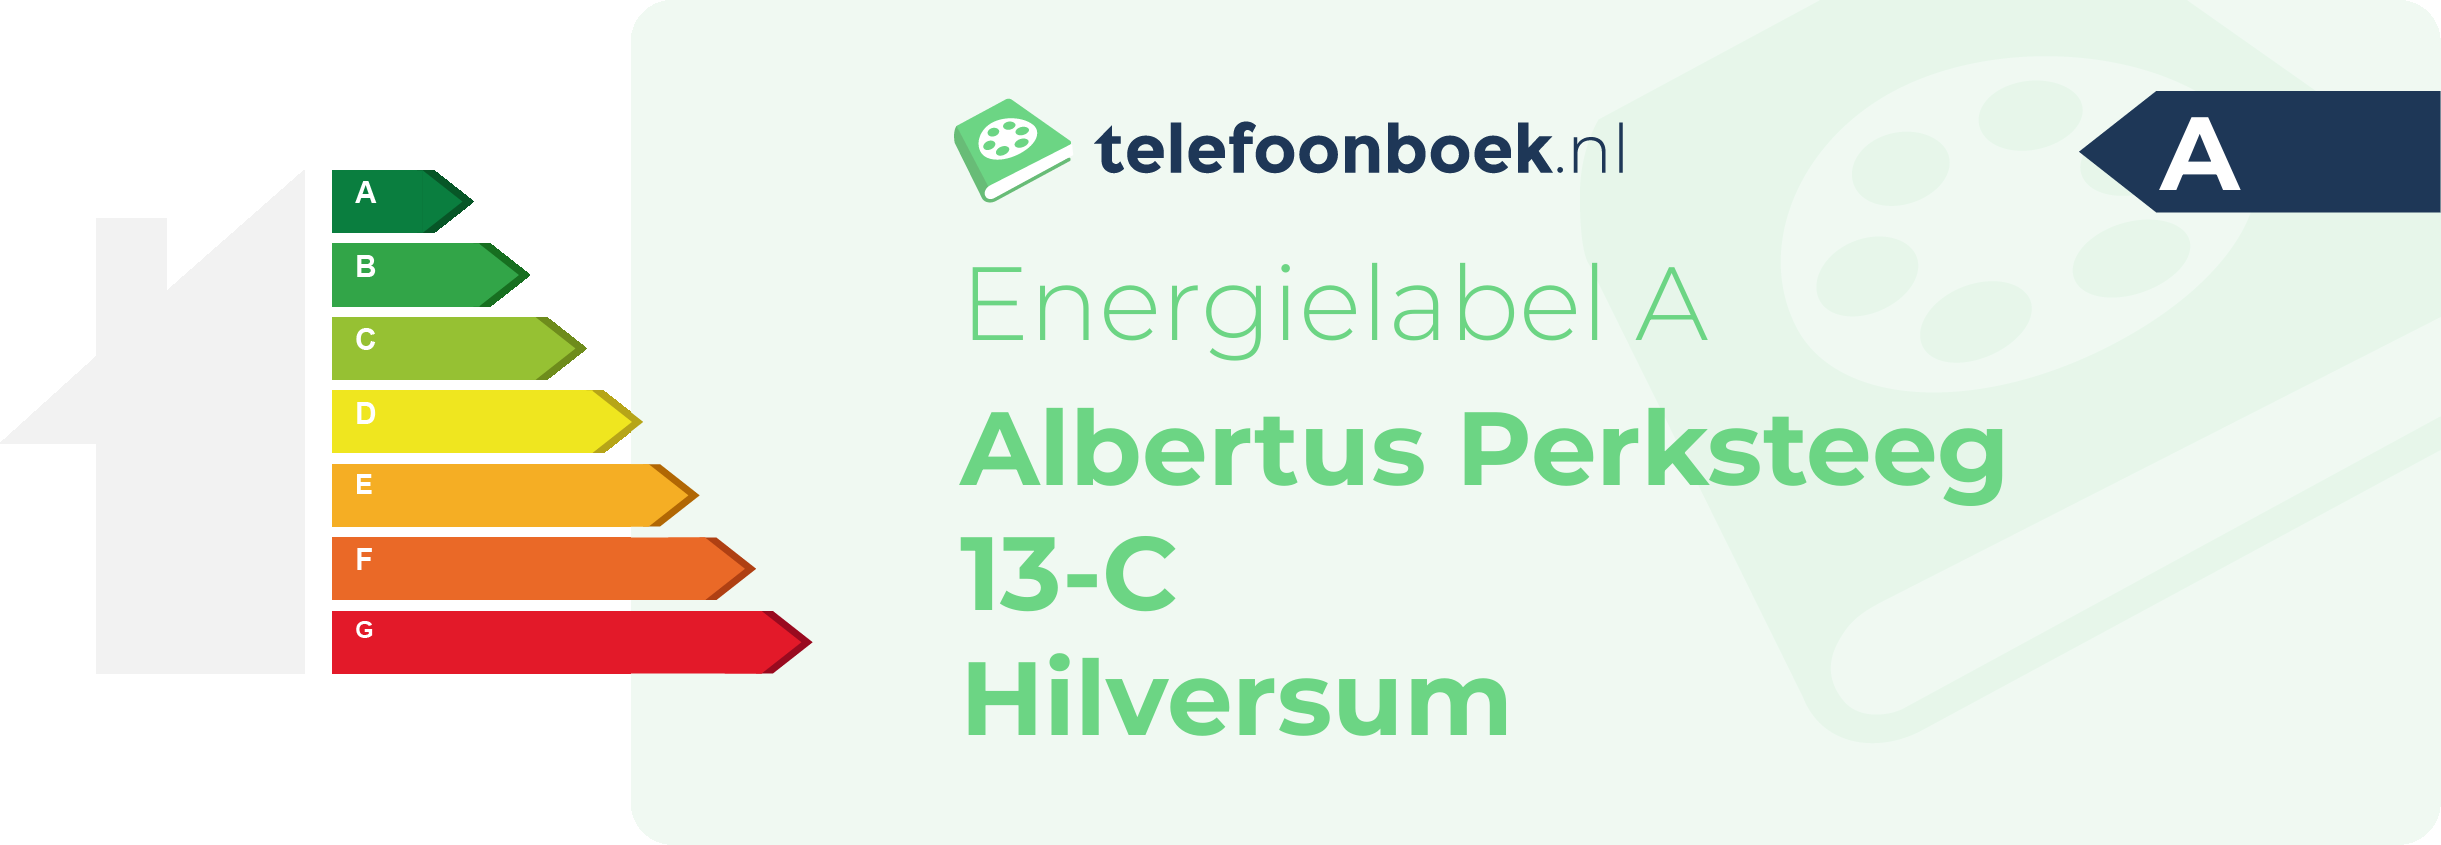 Energielabel Albertus Perksteeg 13-C Hilversum